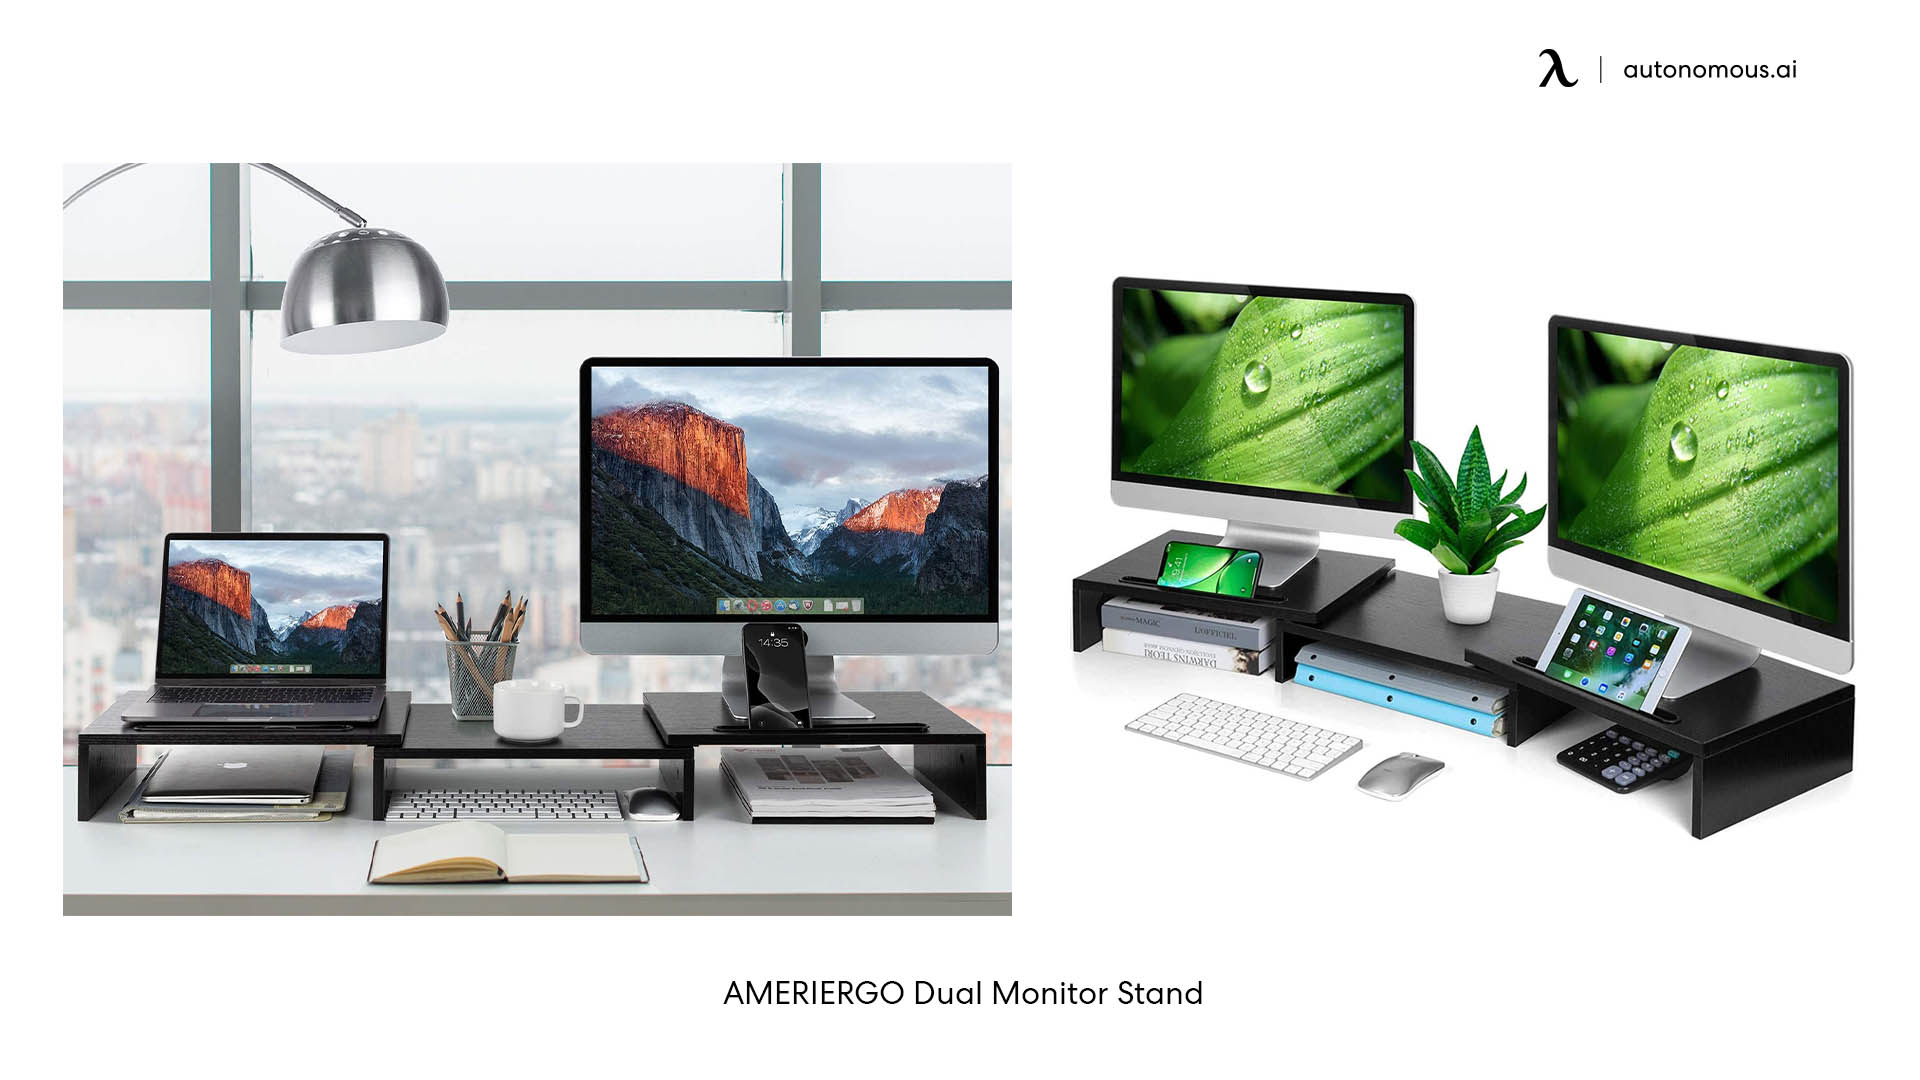 AMERIERGO Dual Monitor Stand